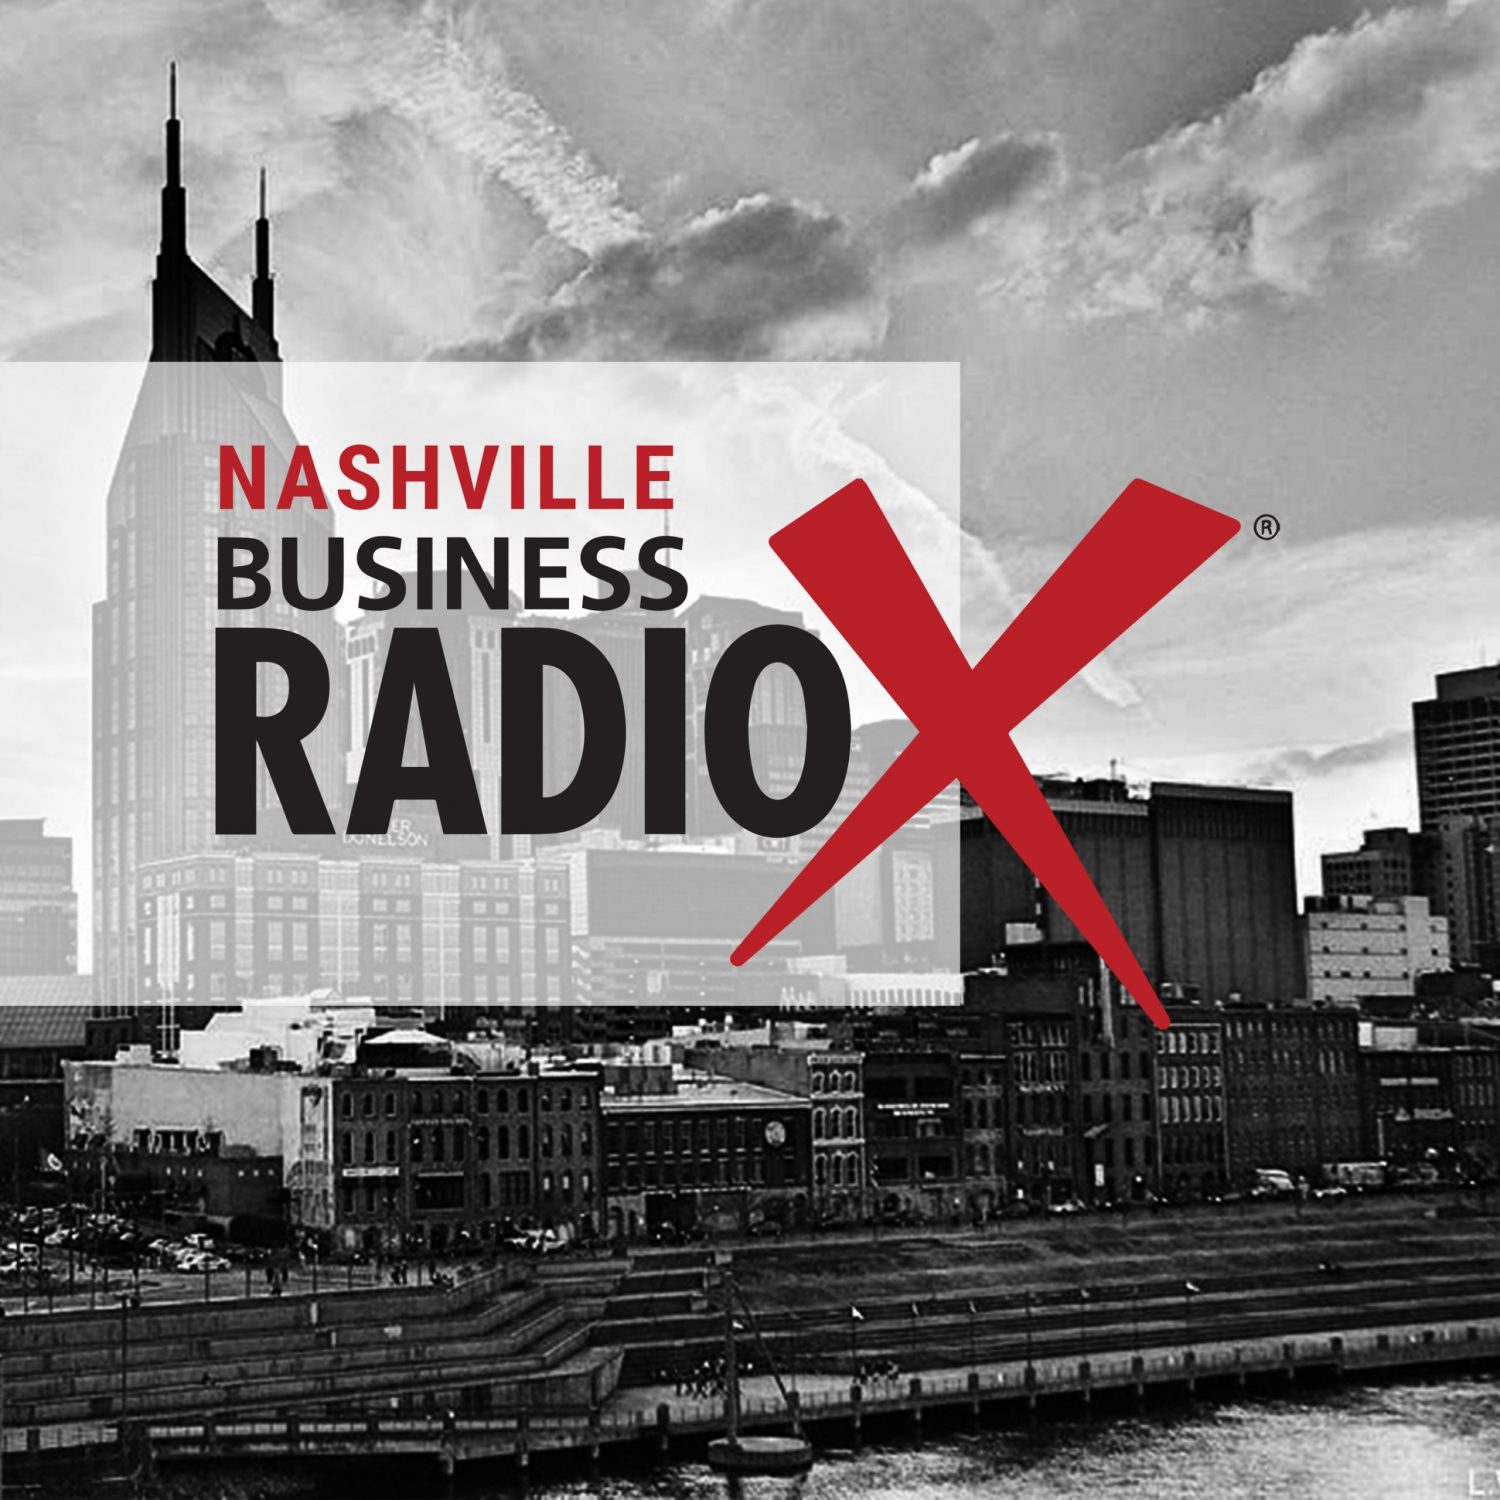 Nashville Business Radio X logo